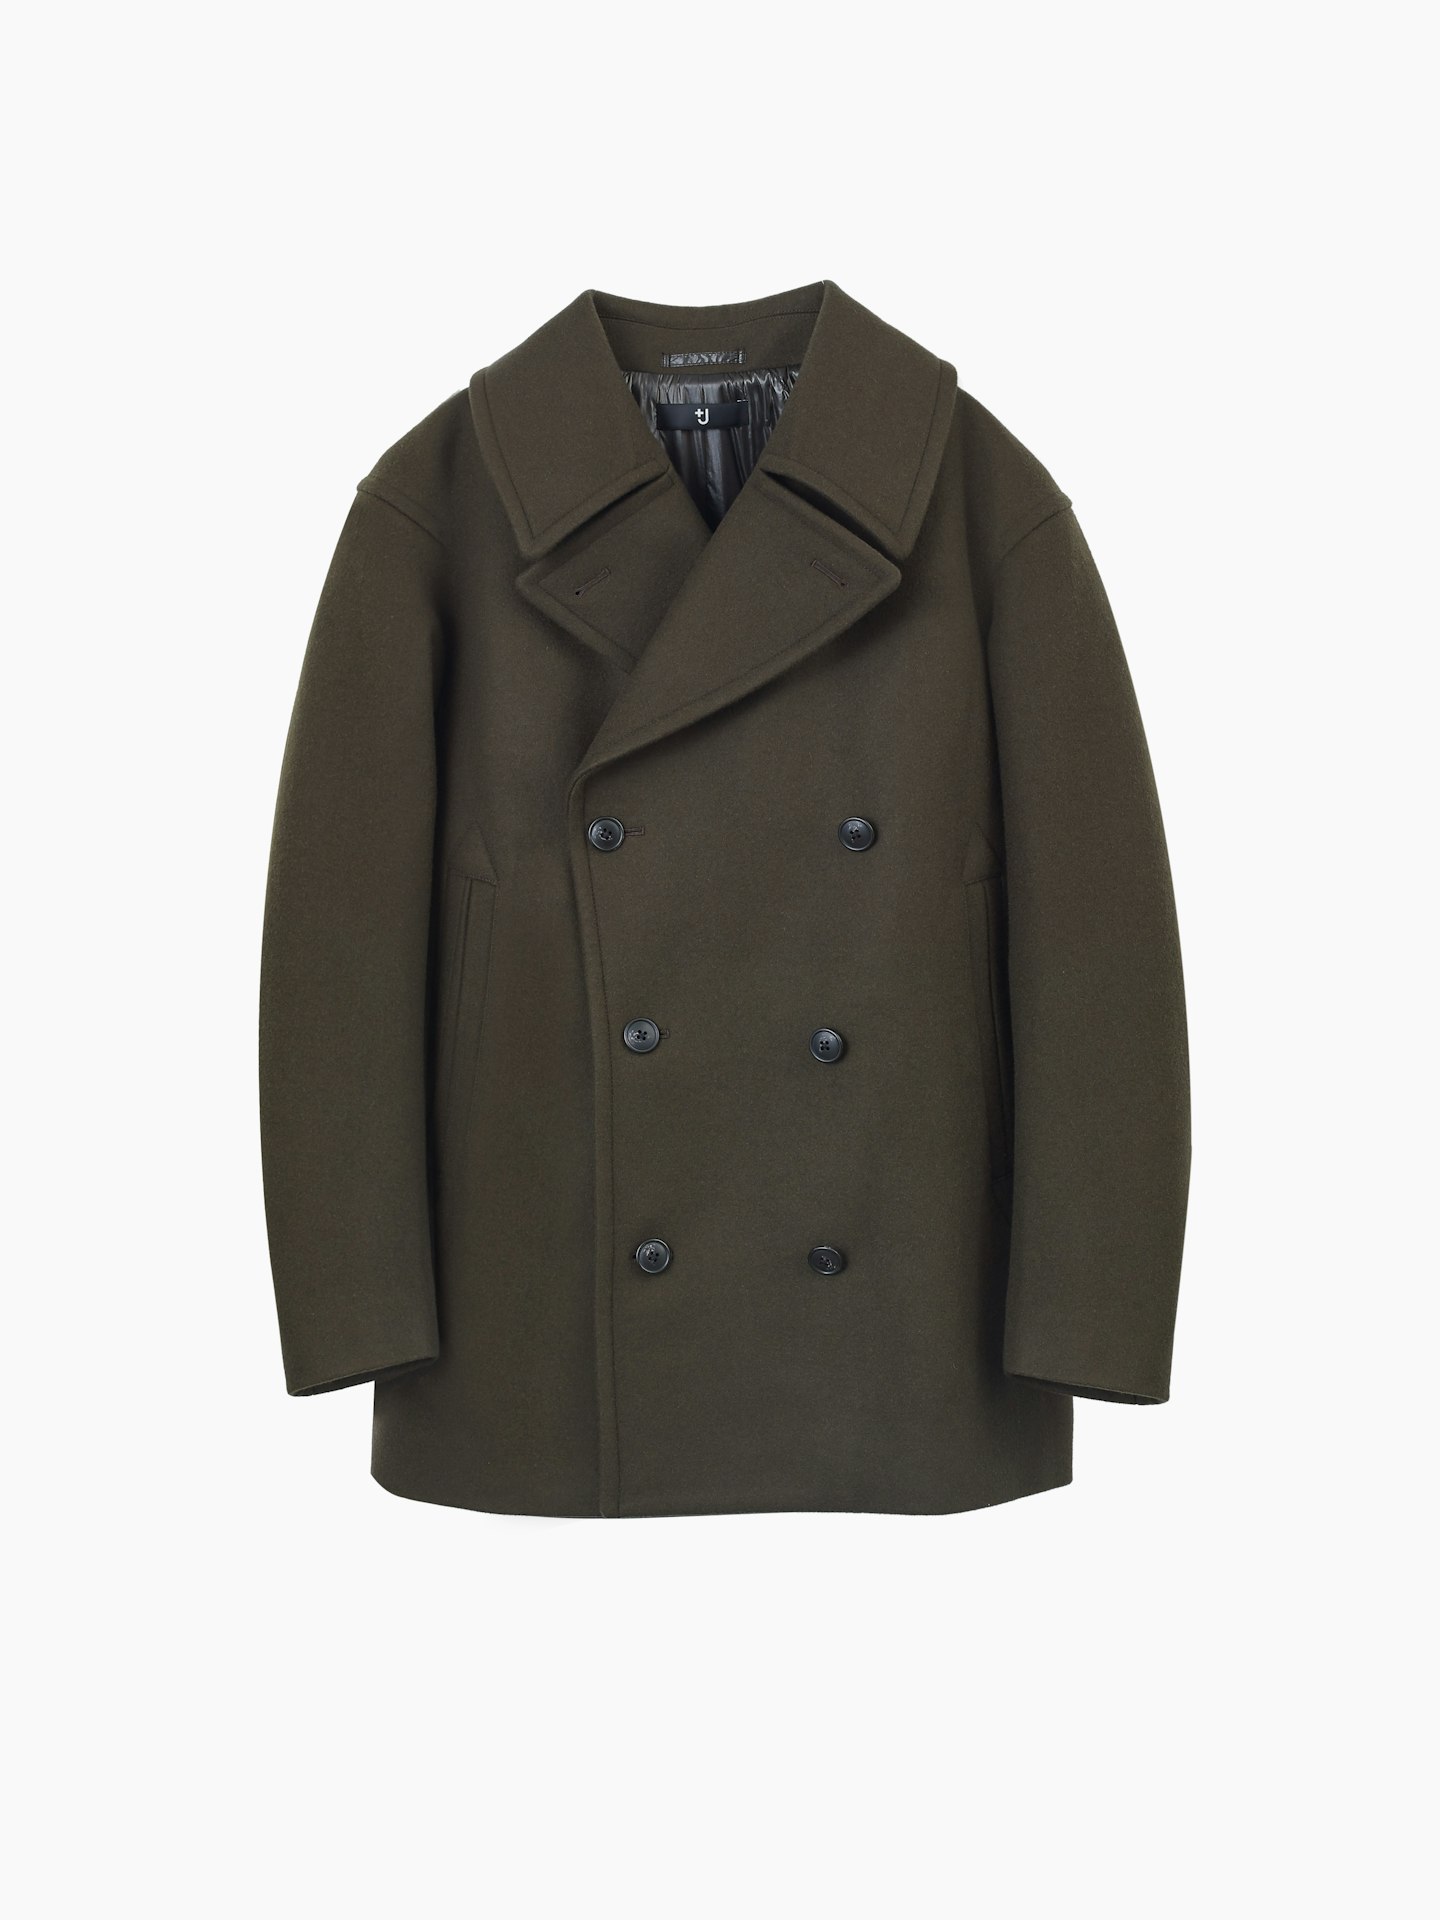 Wool-Blend Pea Coat, £79.90